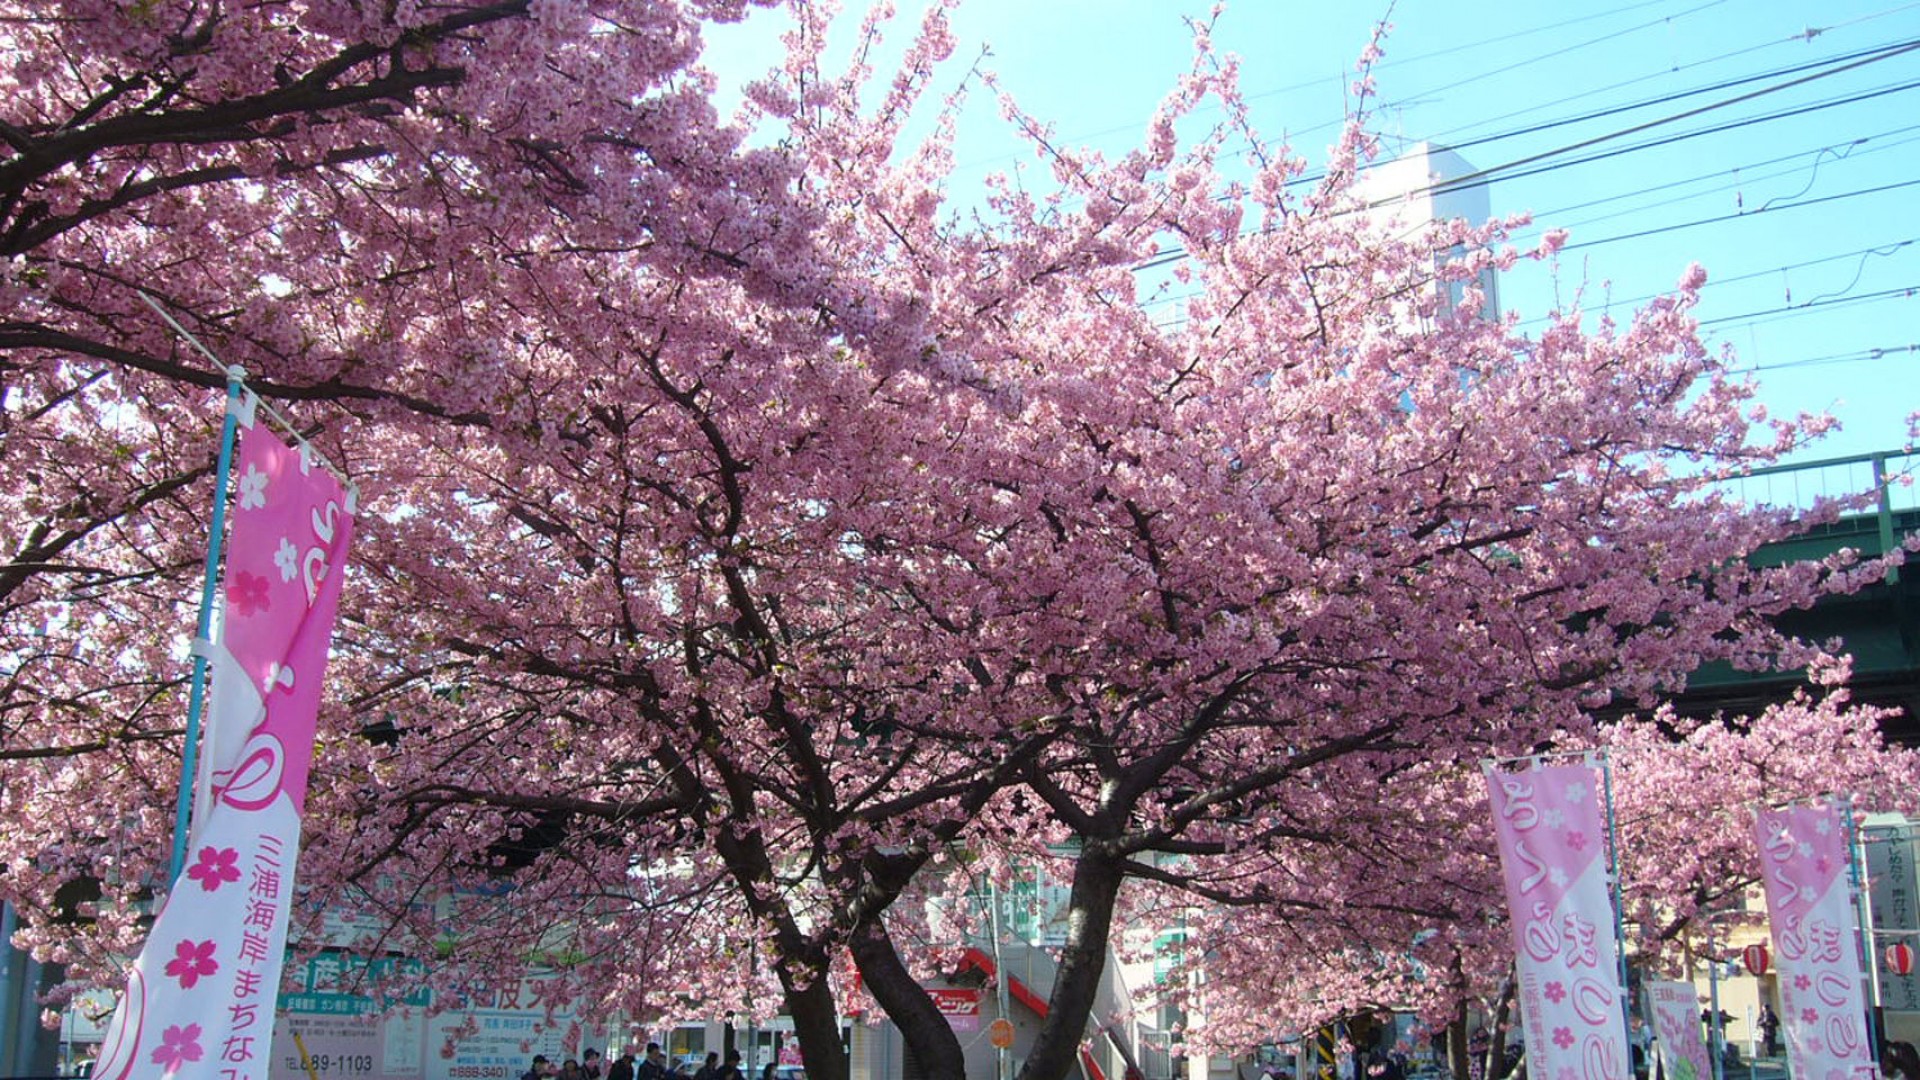 Miura Kaigan Sakura Festival (Kirschblüten)